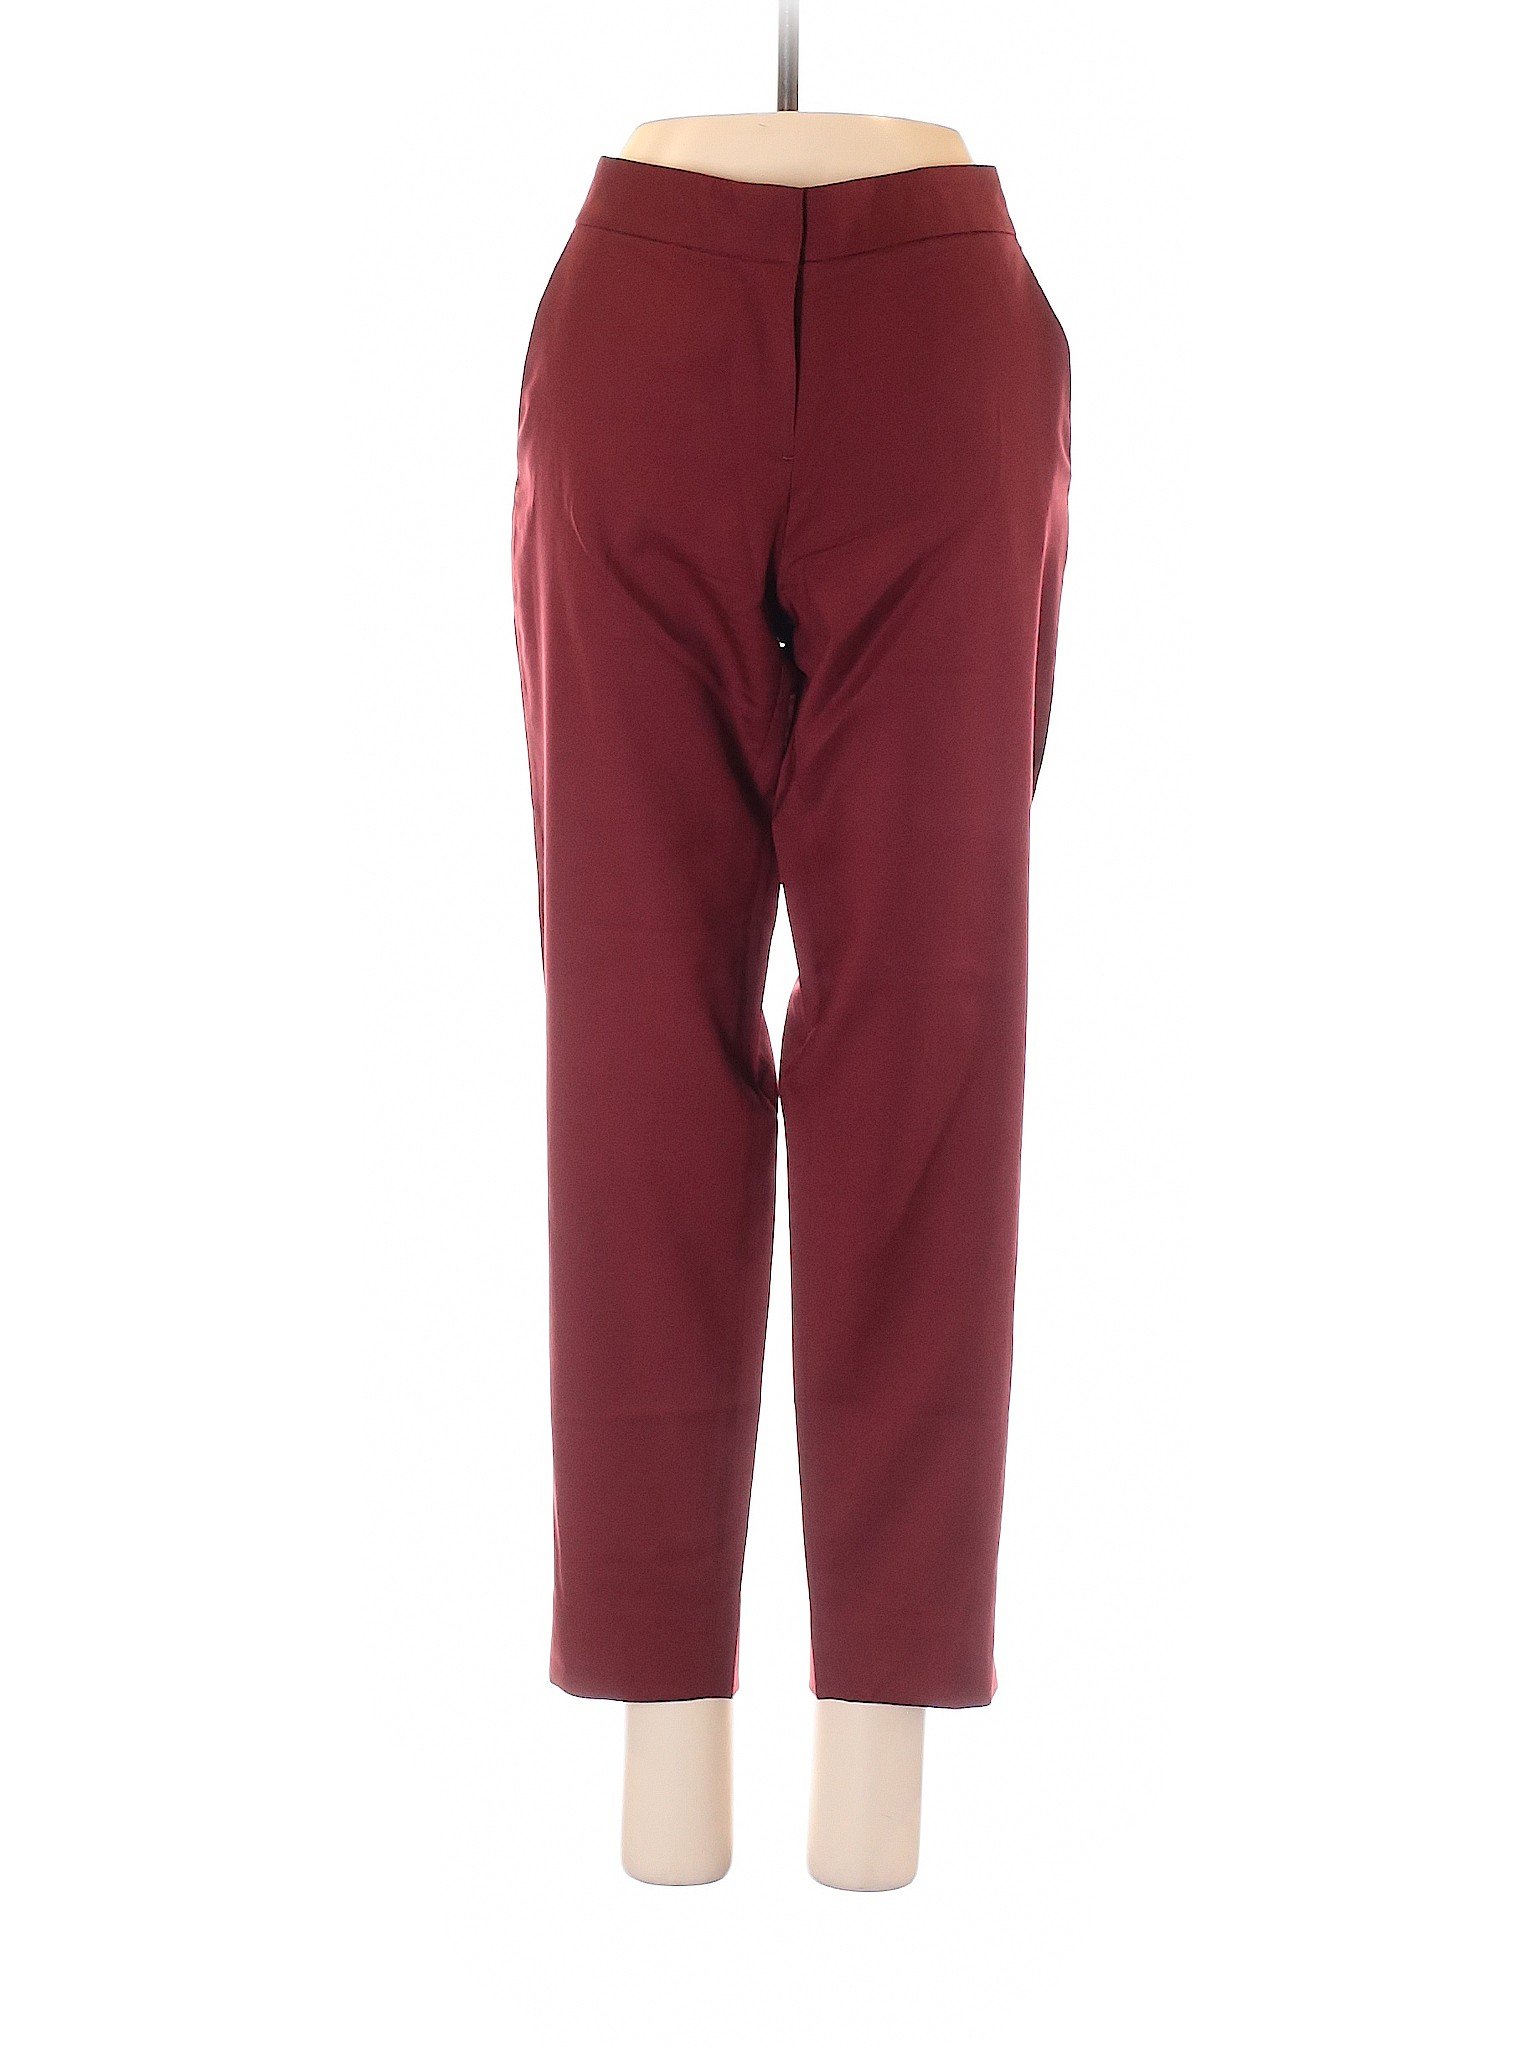 J. Crew Women Red Wool Pants 2 Petites | eBay